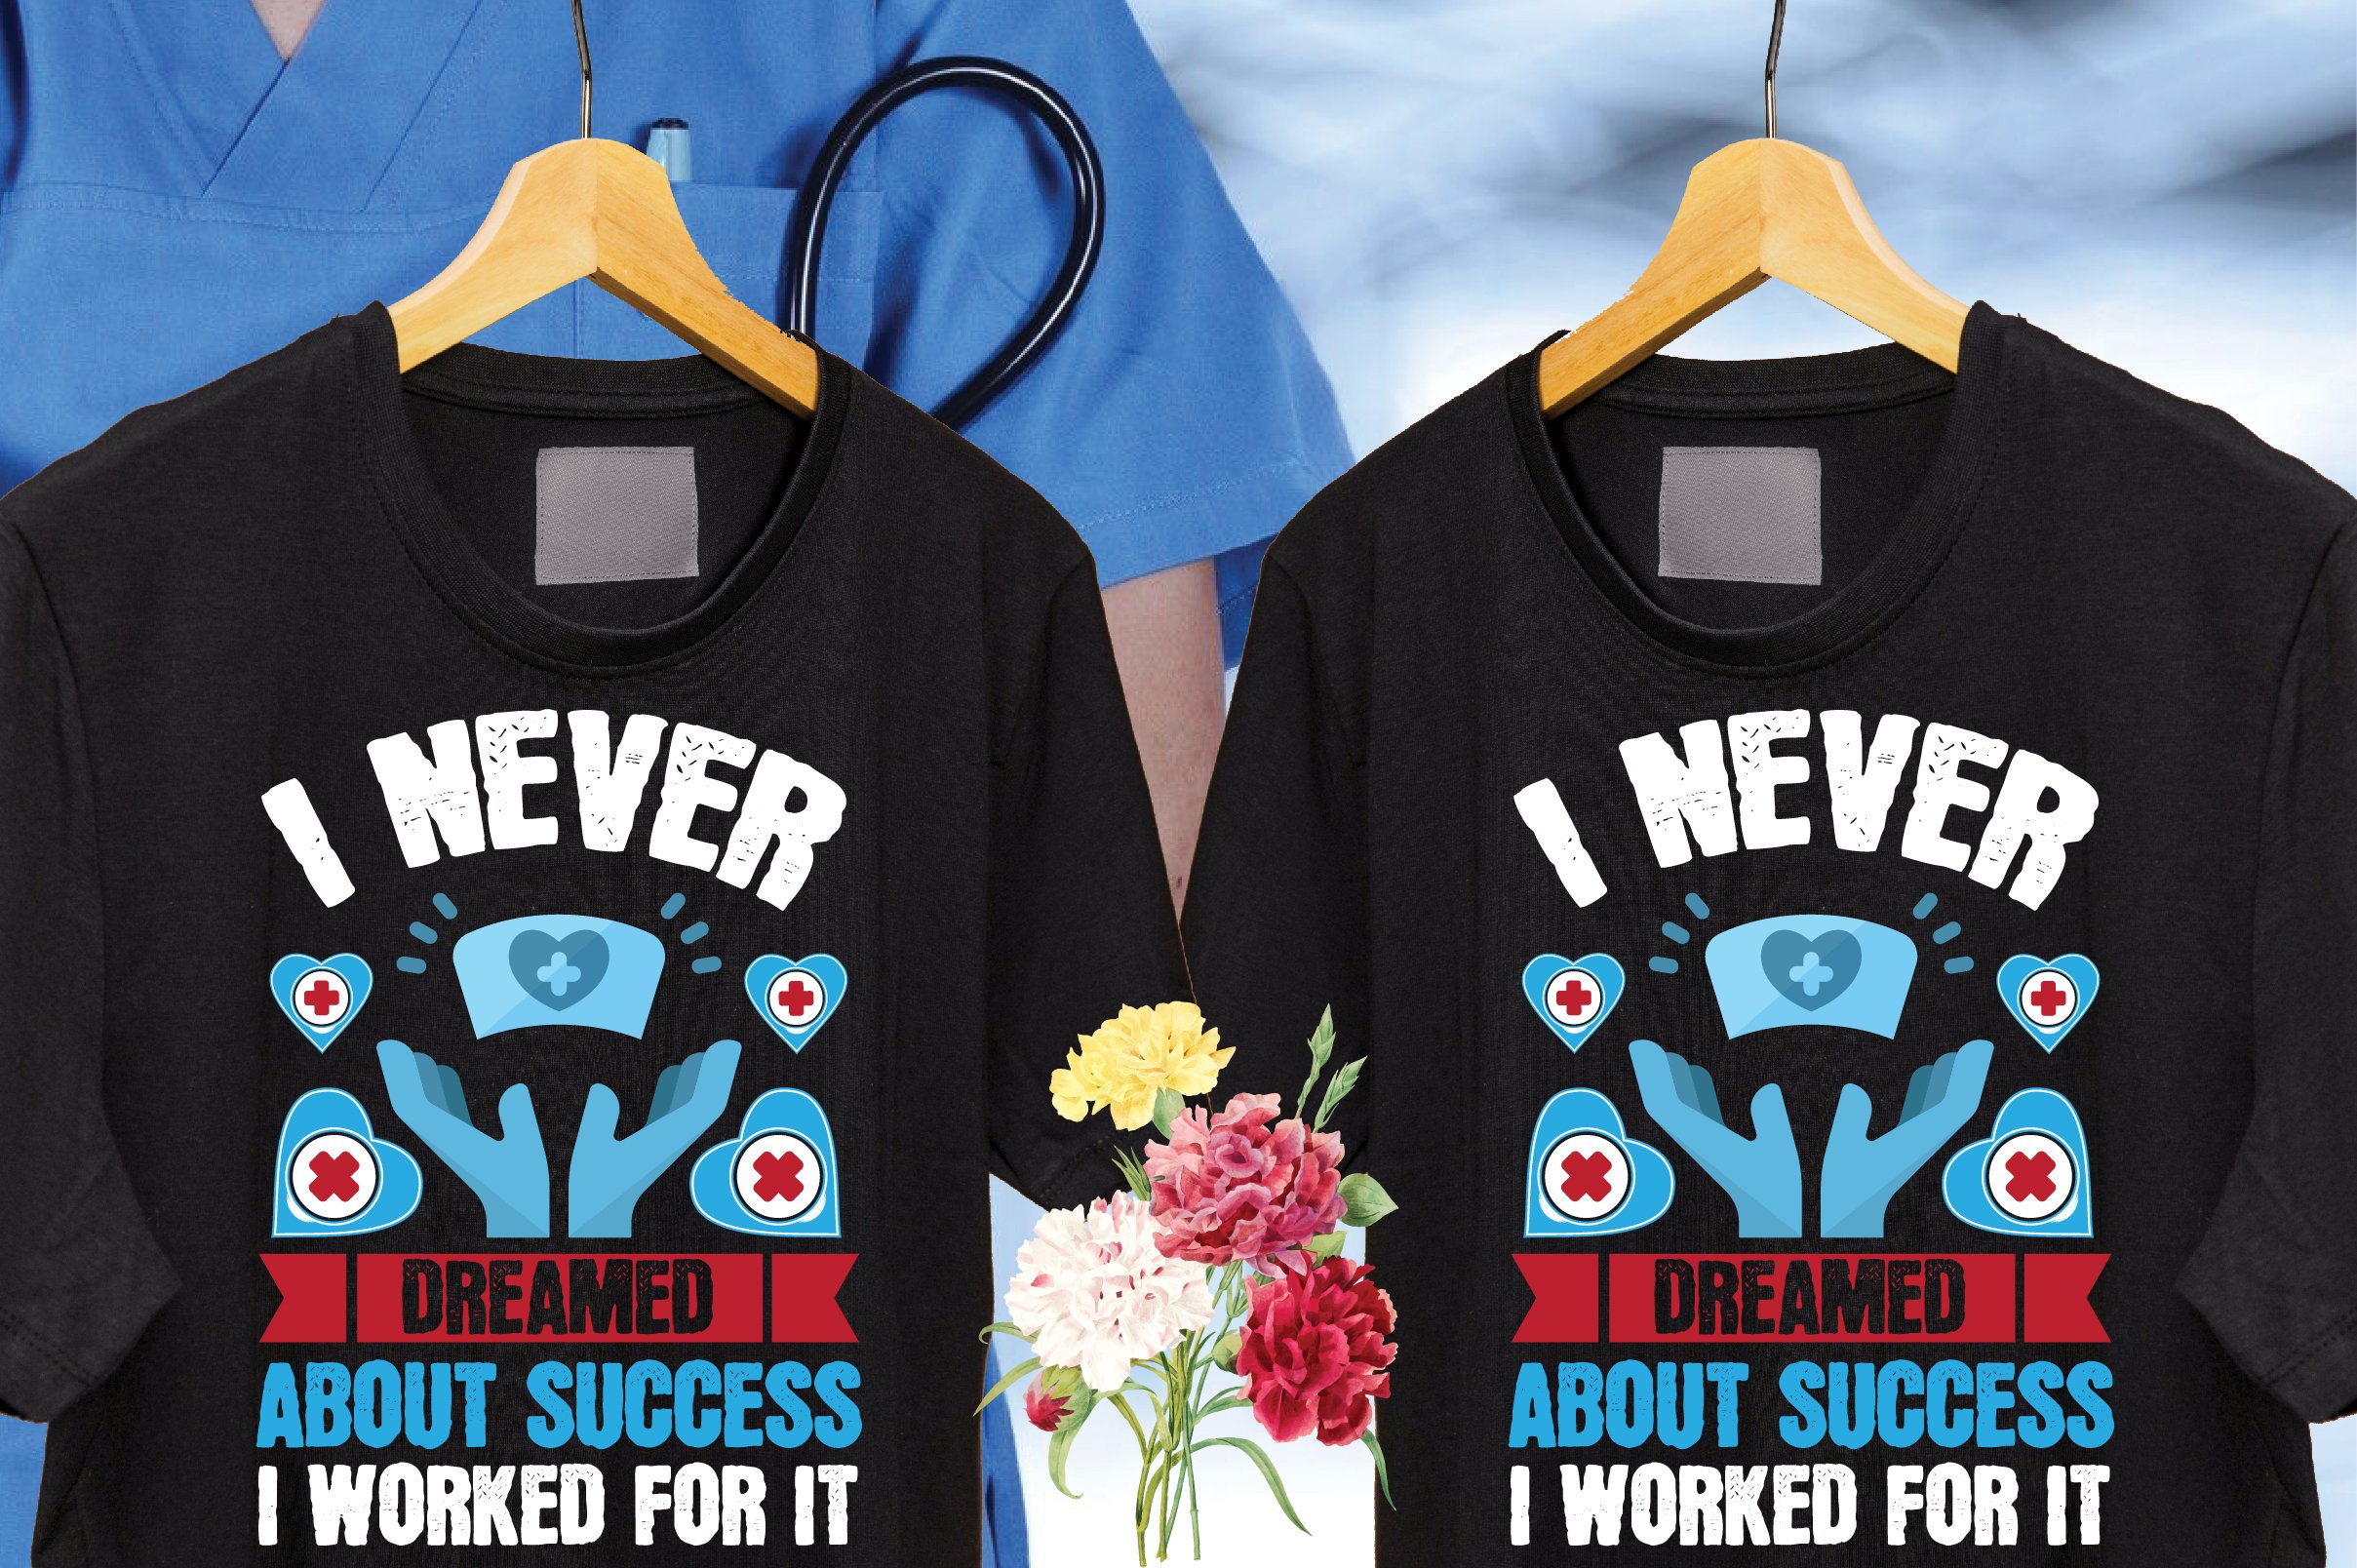 So cool nurse print on the dark t-shirts.